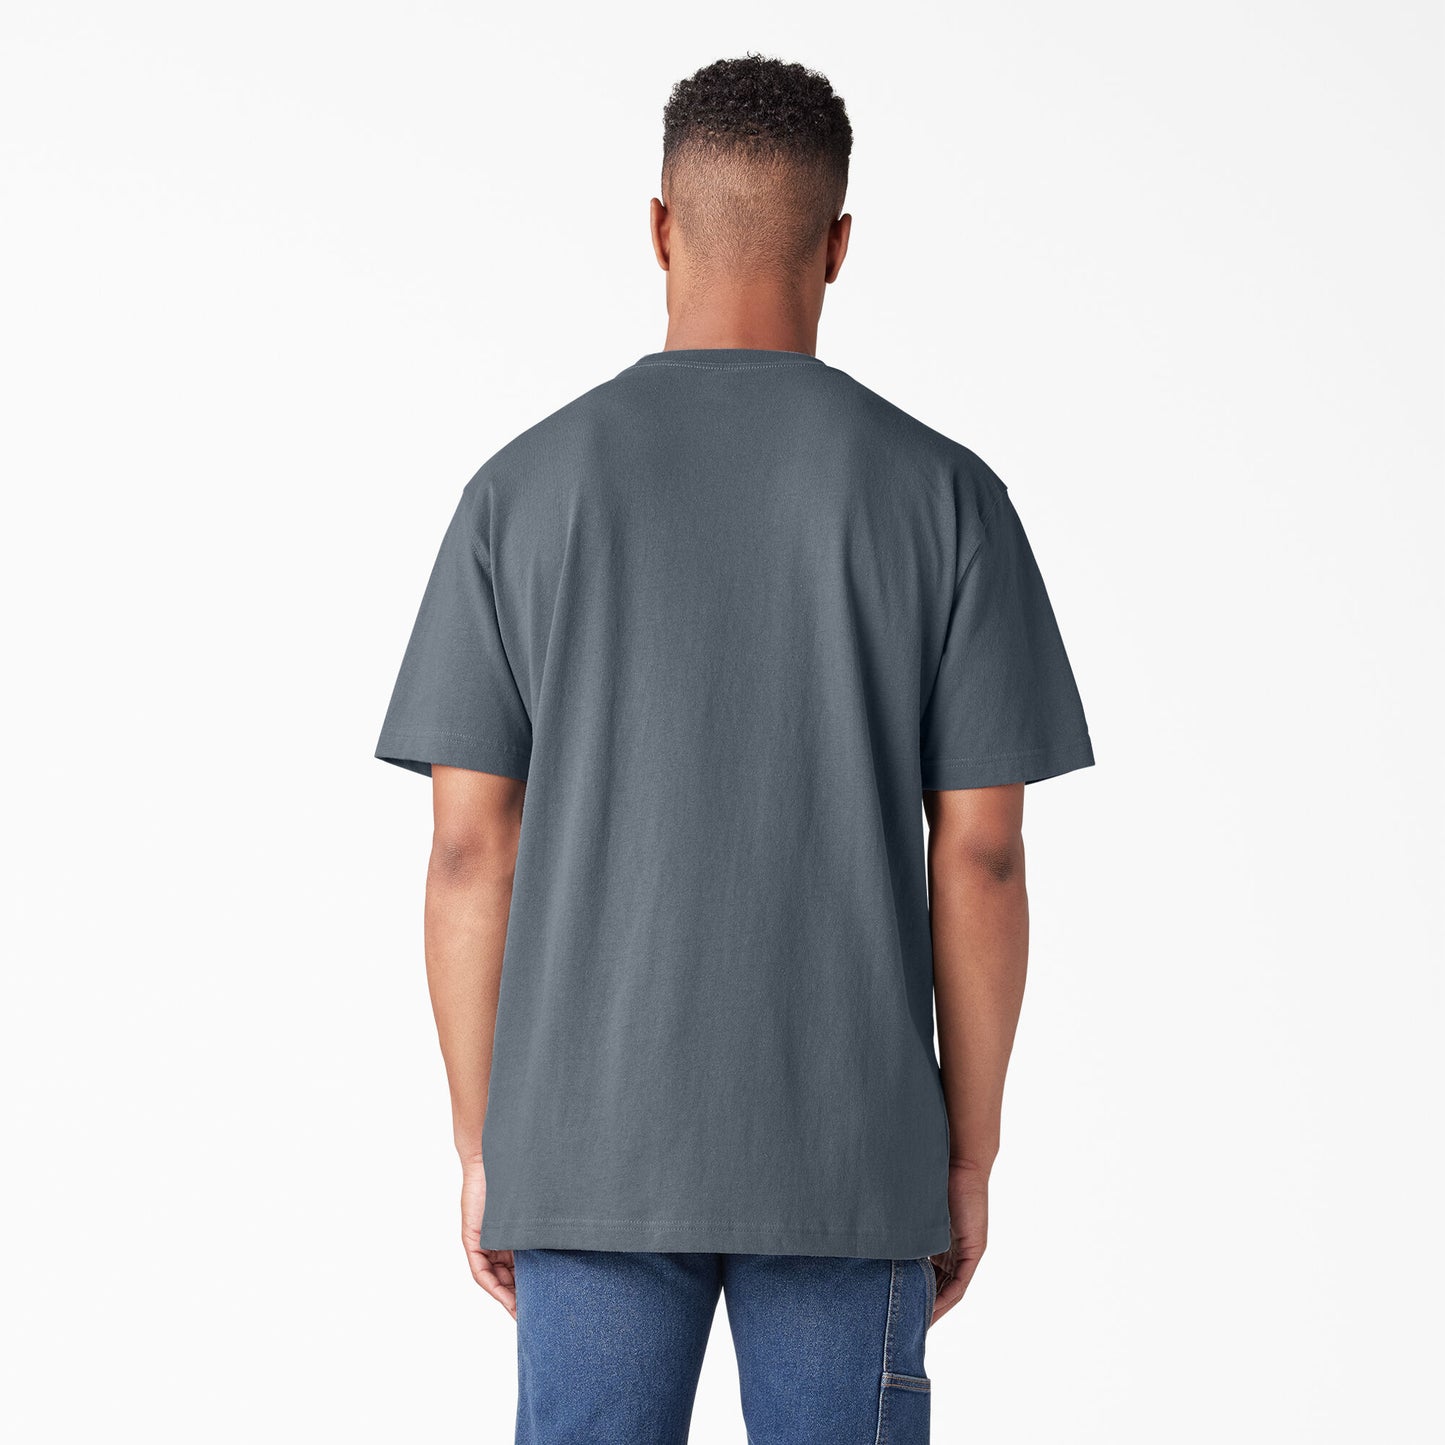 DICKIES Short Sleeve Workwear Graphic T-Shirt